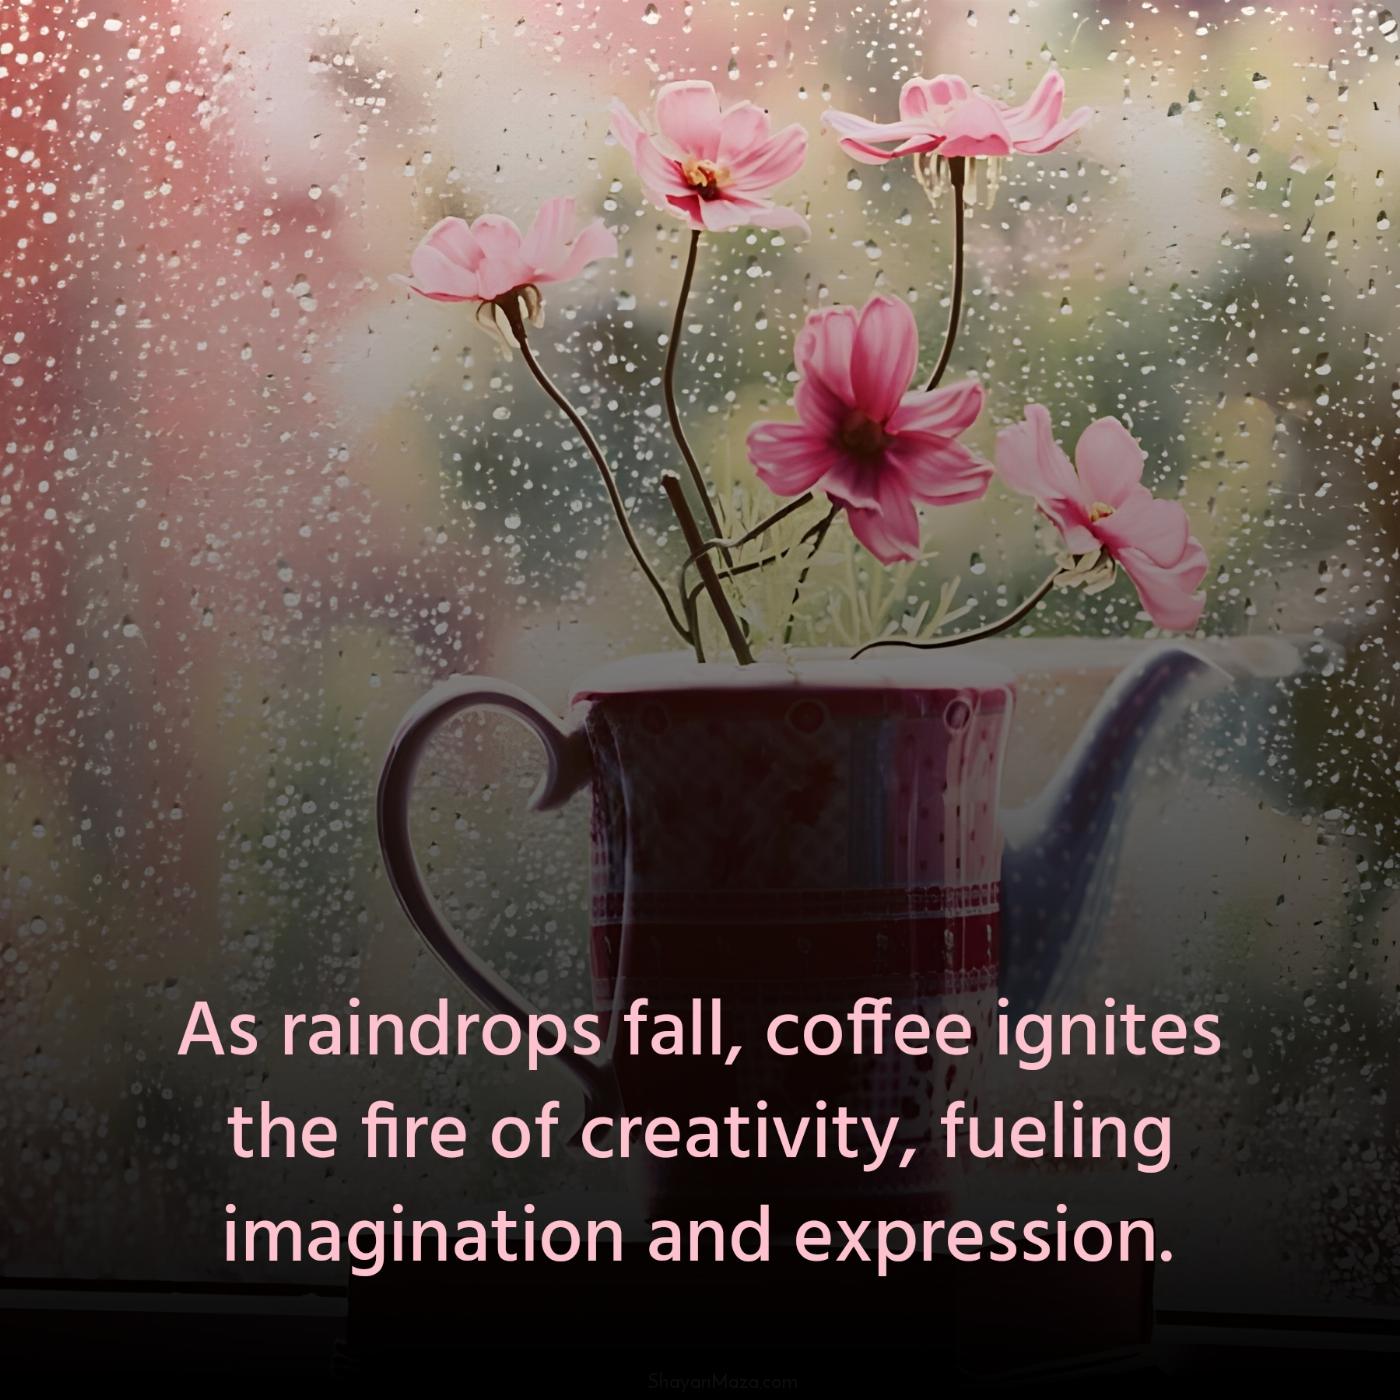 As raindrops fall coffee ignites the fire of creativity